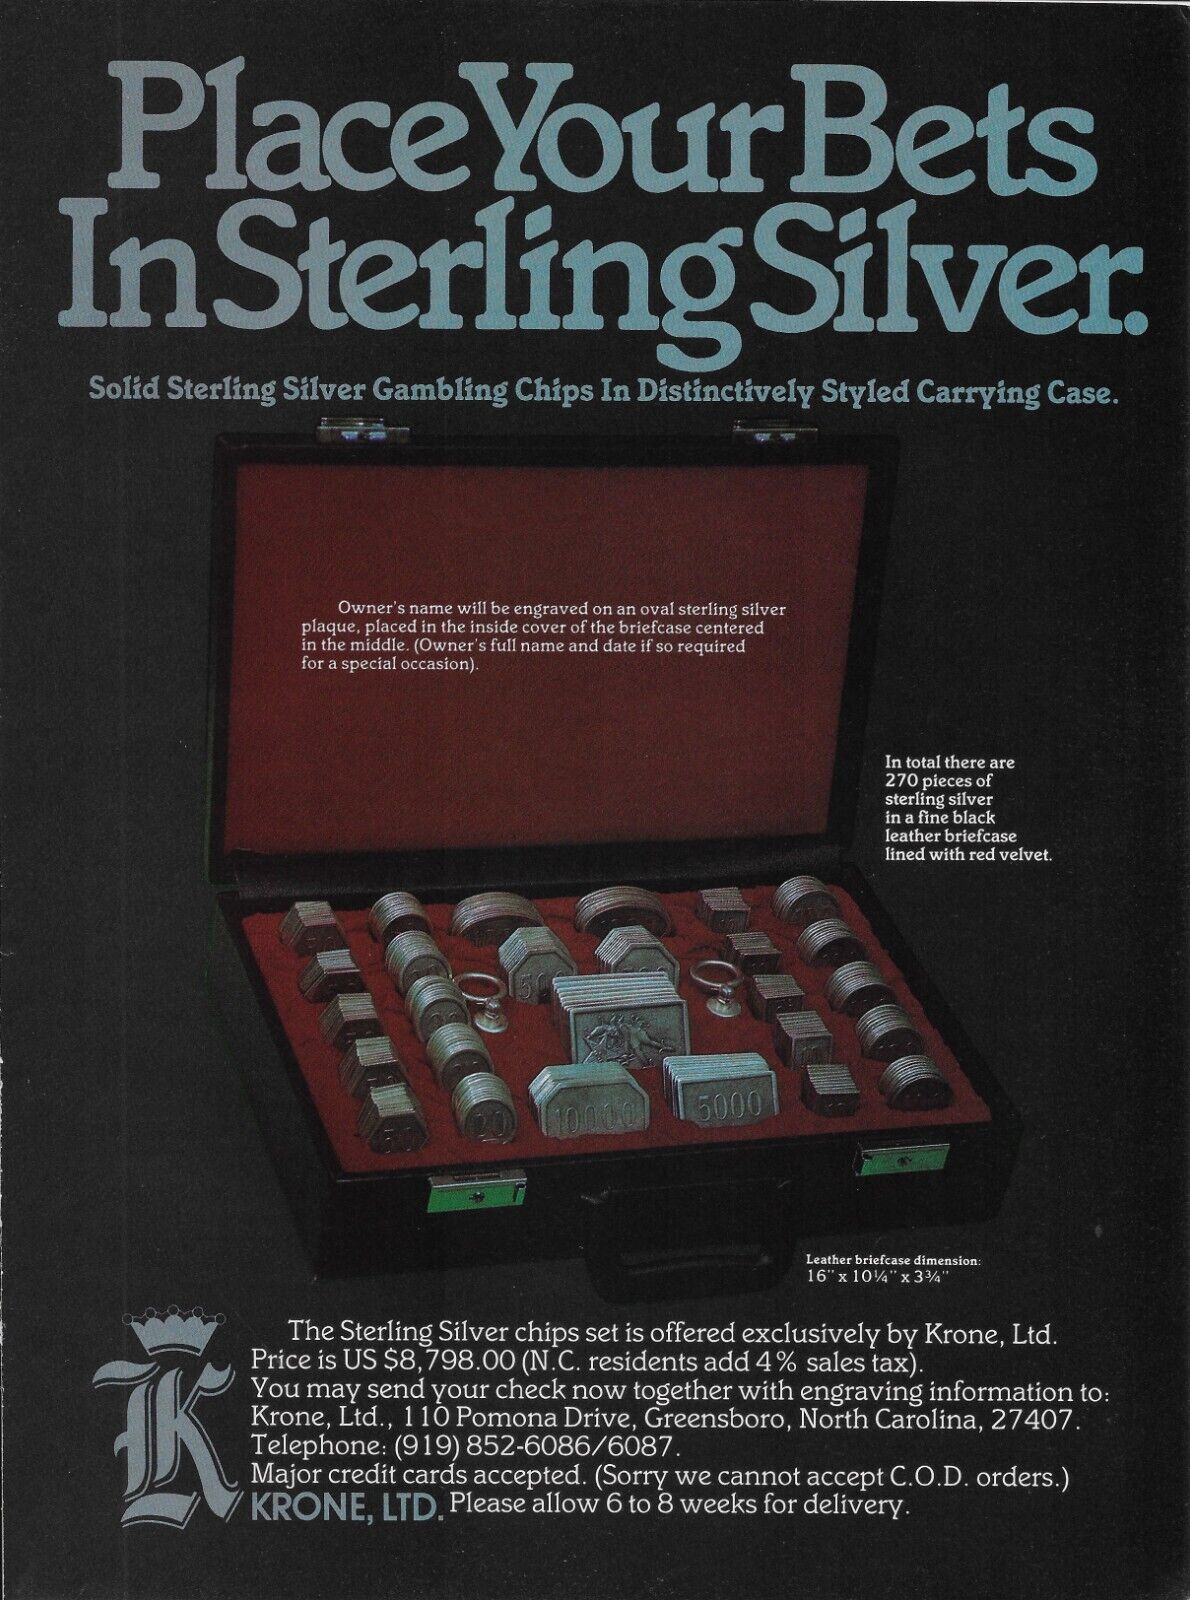 1983 Krone LTD Sterling Silver Chips Poker Gambling Carrying Vintage Print Ad